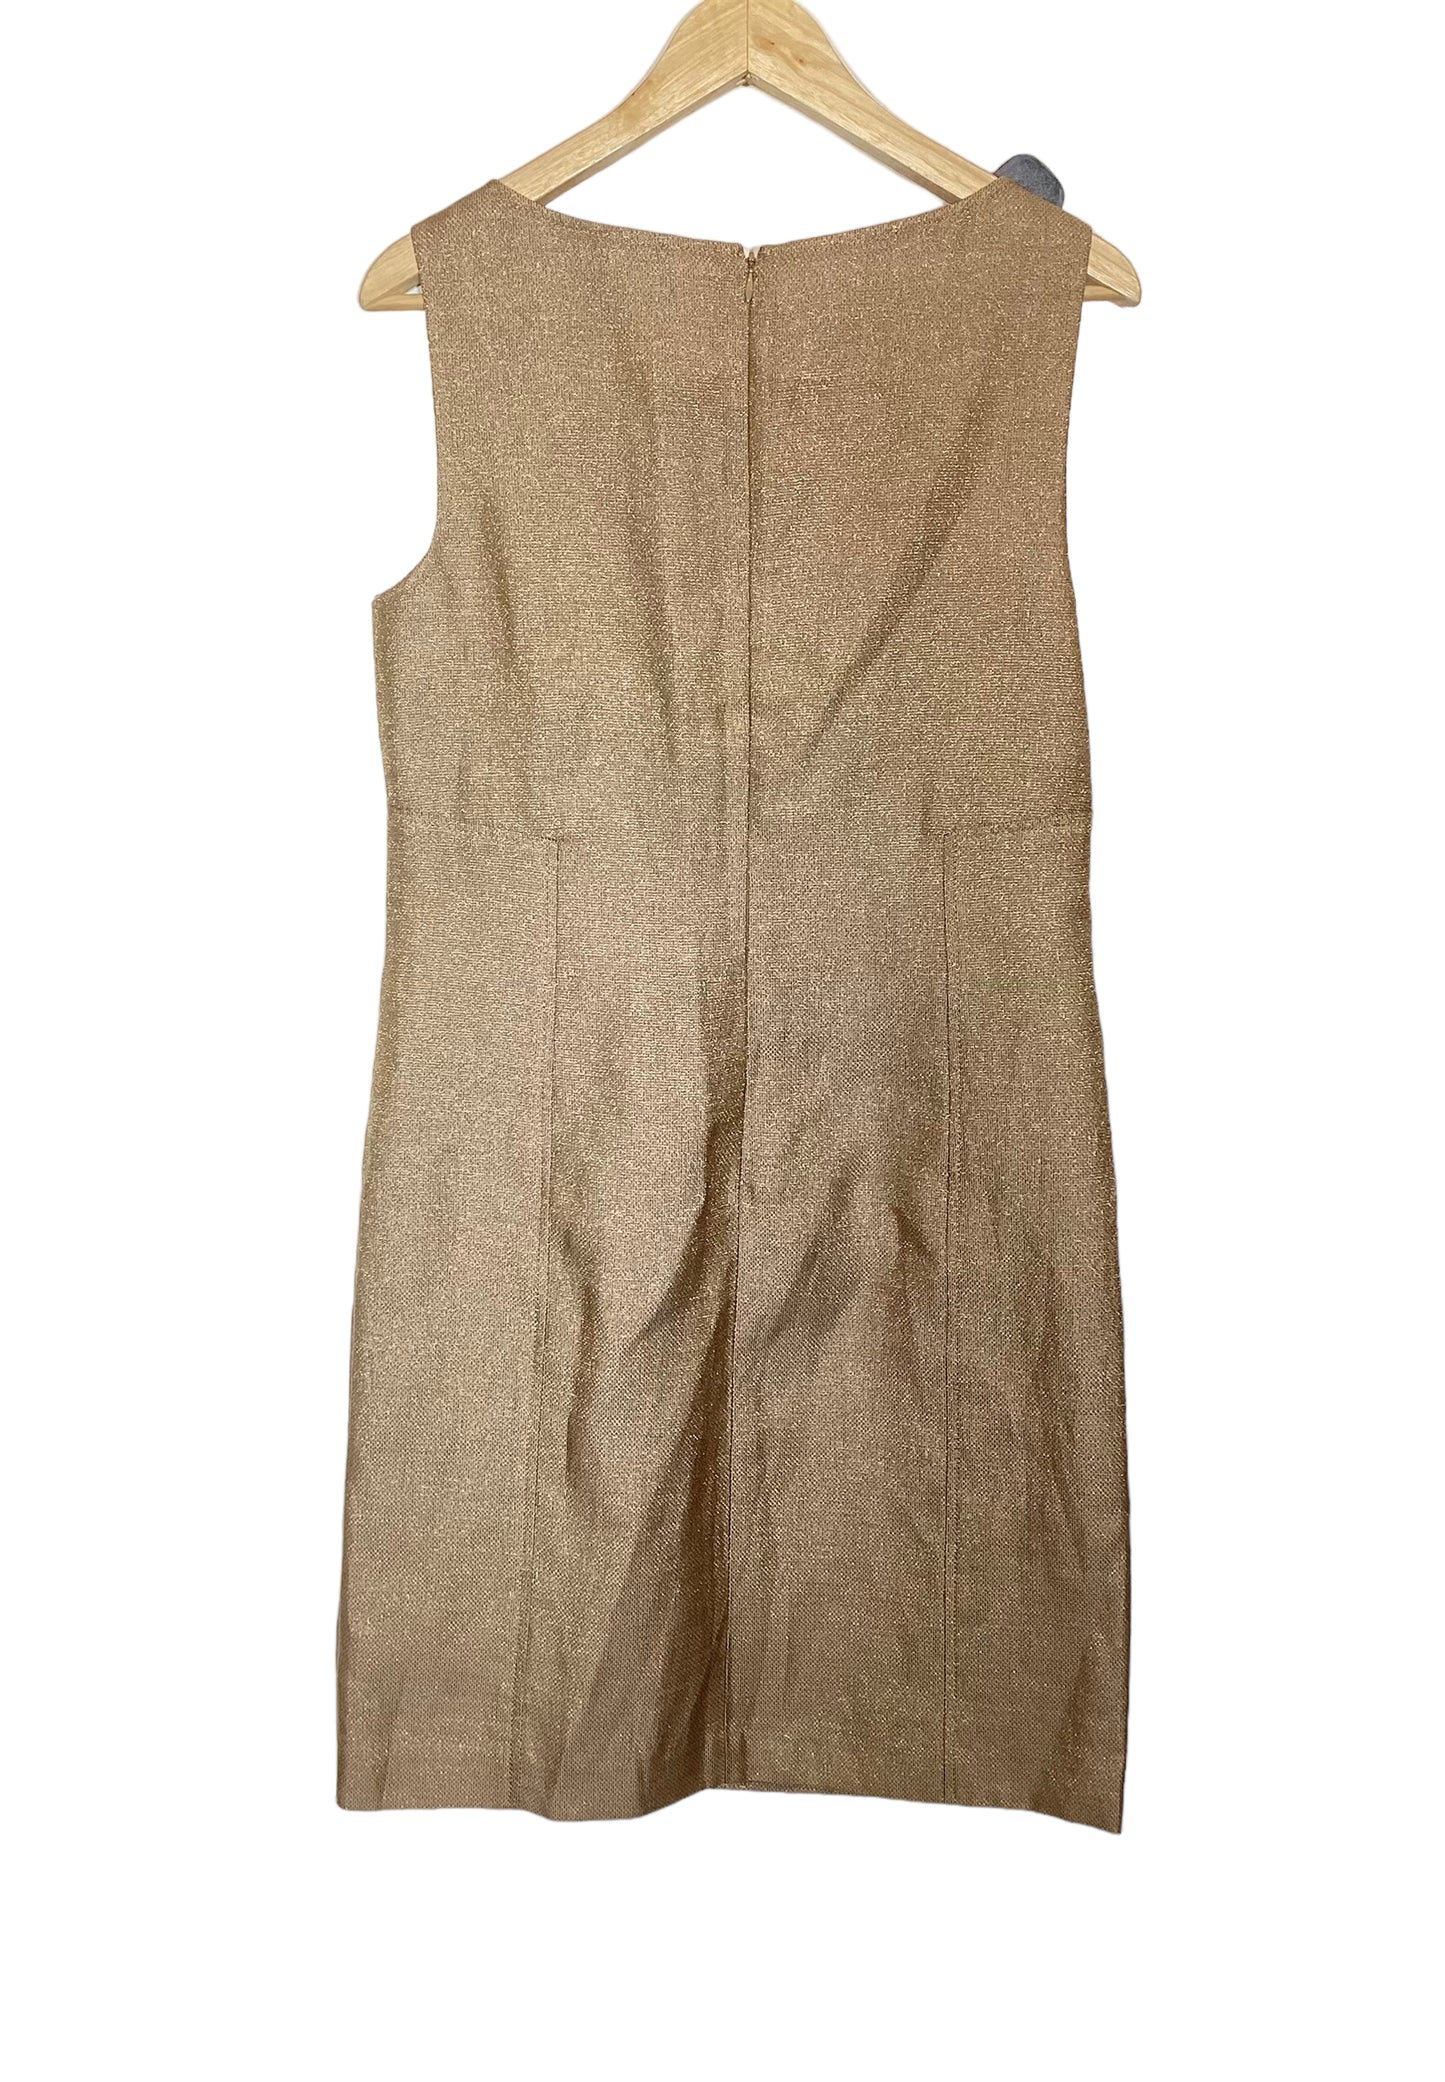 Dress Suit 2pc By Talbots  Size: M